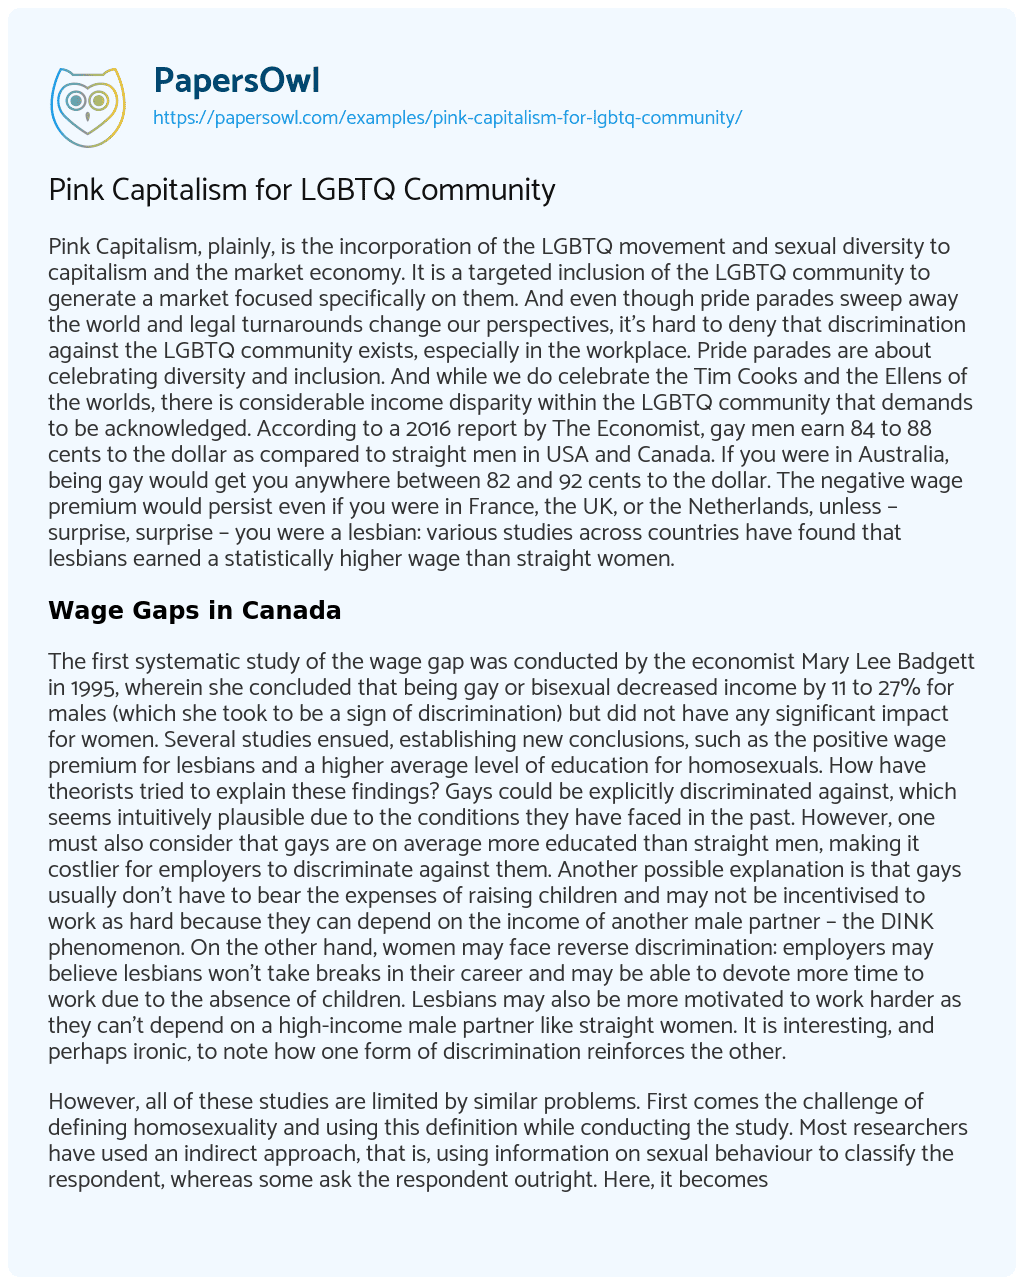 Essay on Pink Capitalism for LGBTQ Community